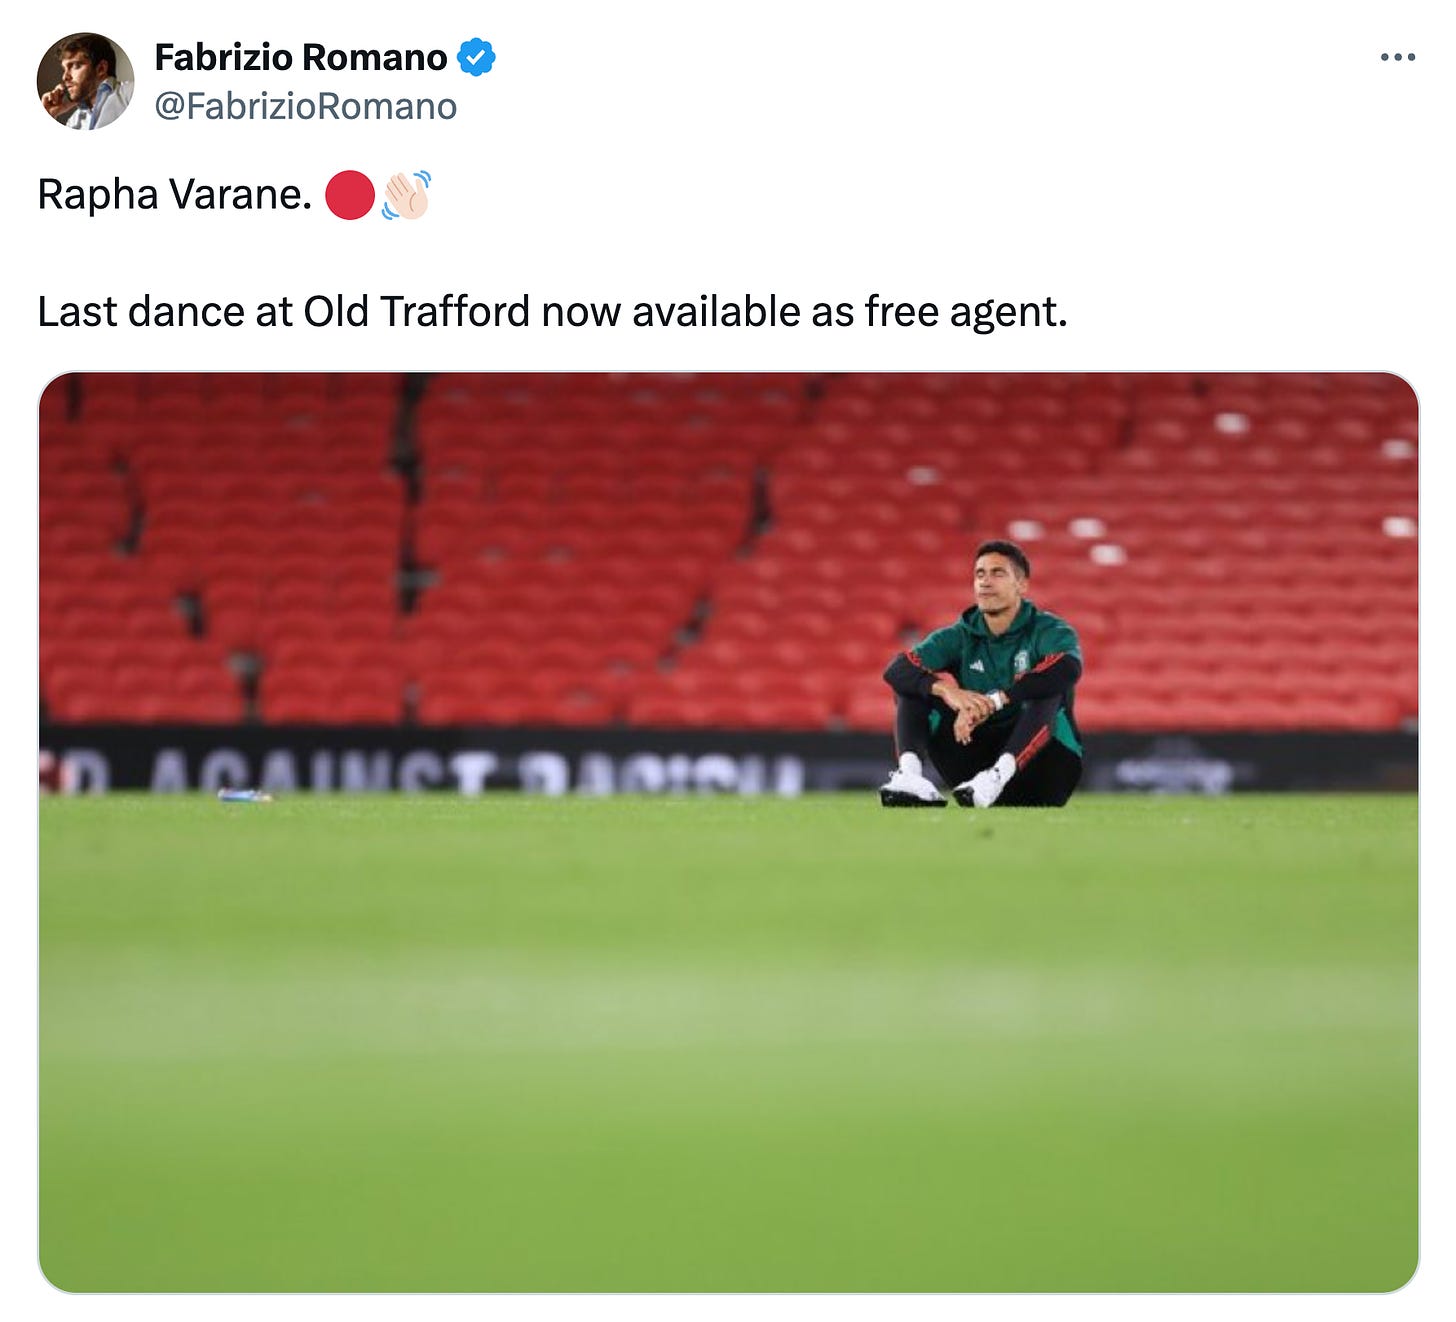 A tweet by Fabrizio Romano showing Raphael Varane sitting on the field at Old Trafford